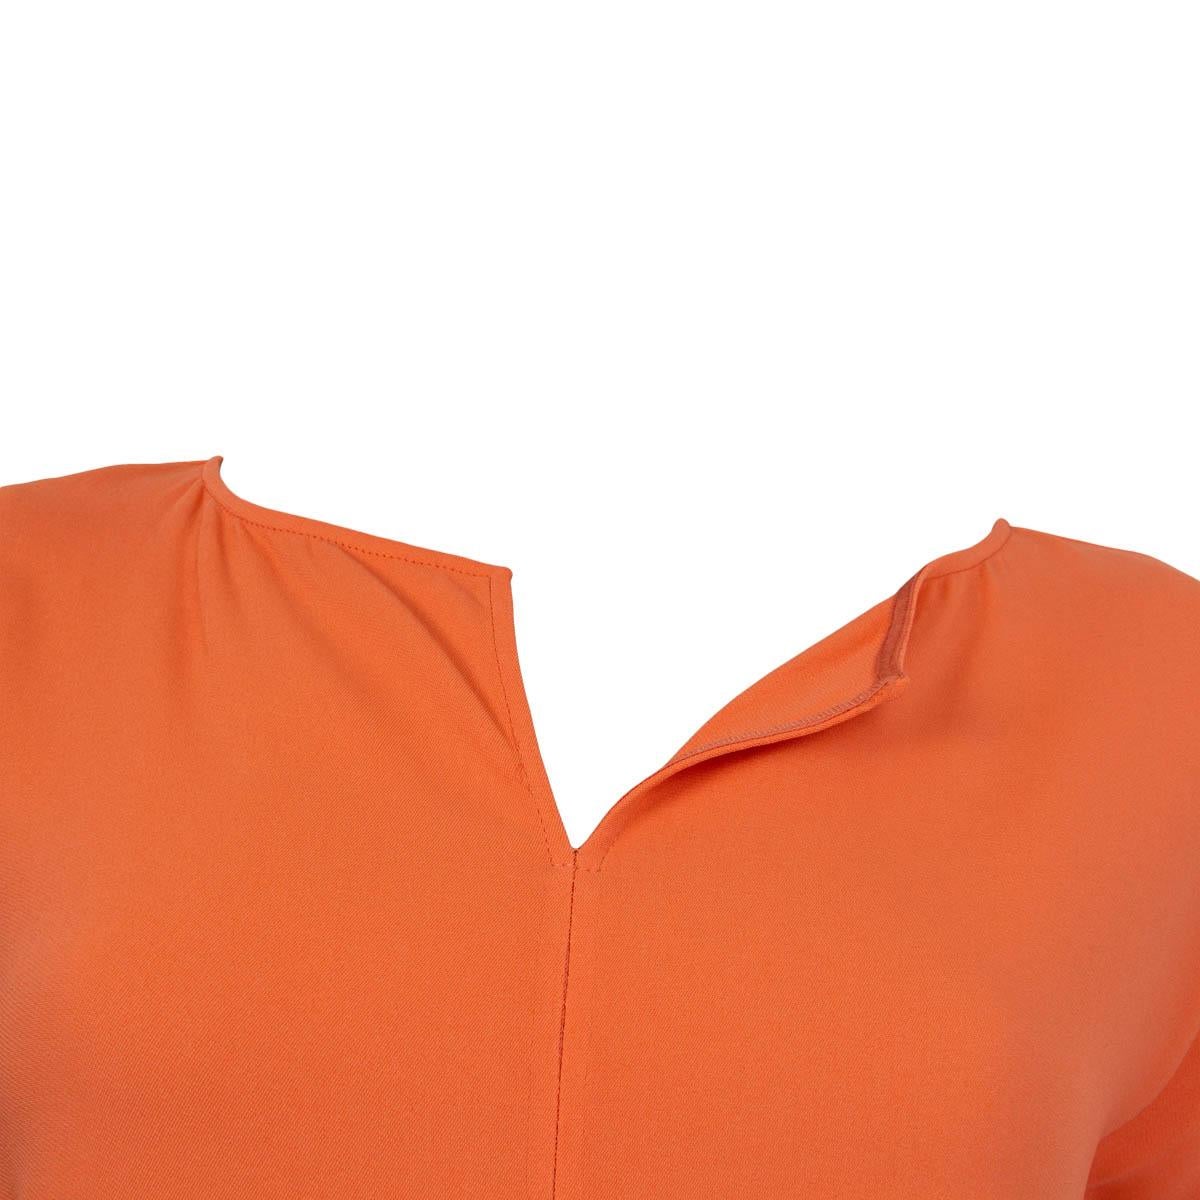 Orange STELLA MCCARTNEY orange viscose 2016 CINTHYA Short Sleeve Dress 40 S For Sale